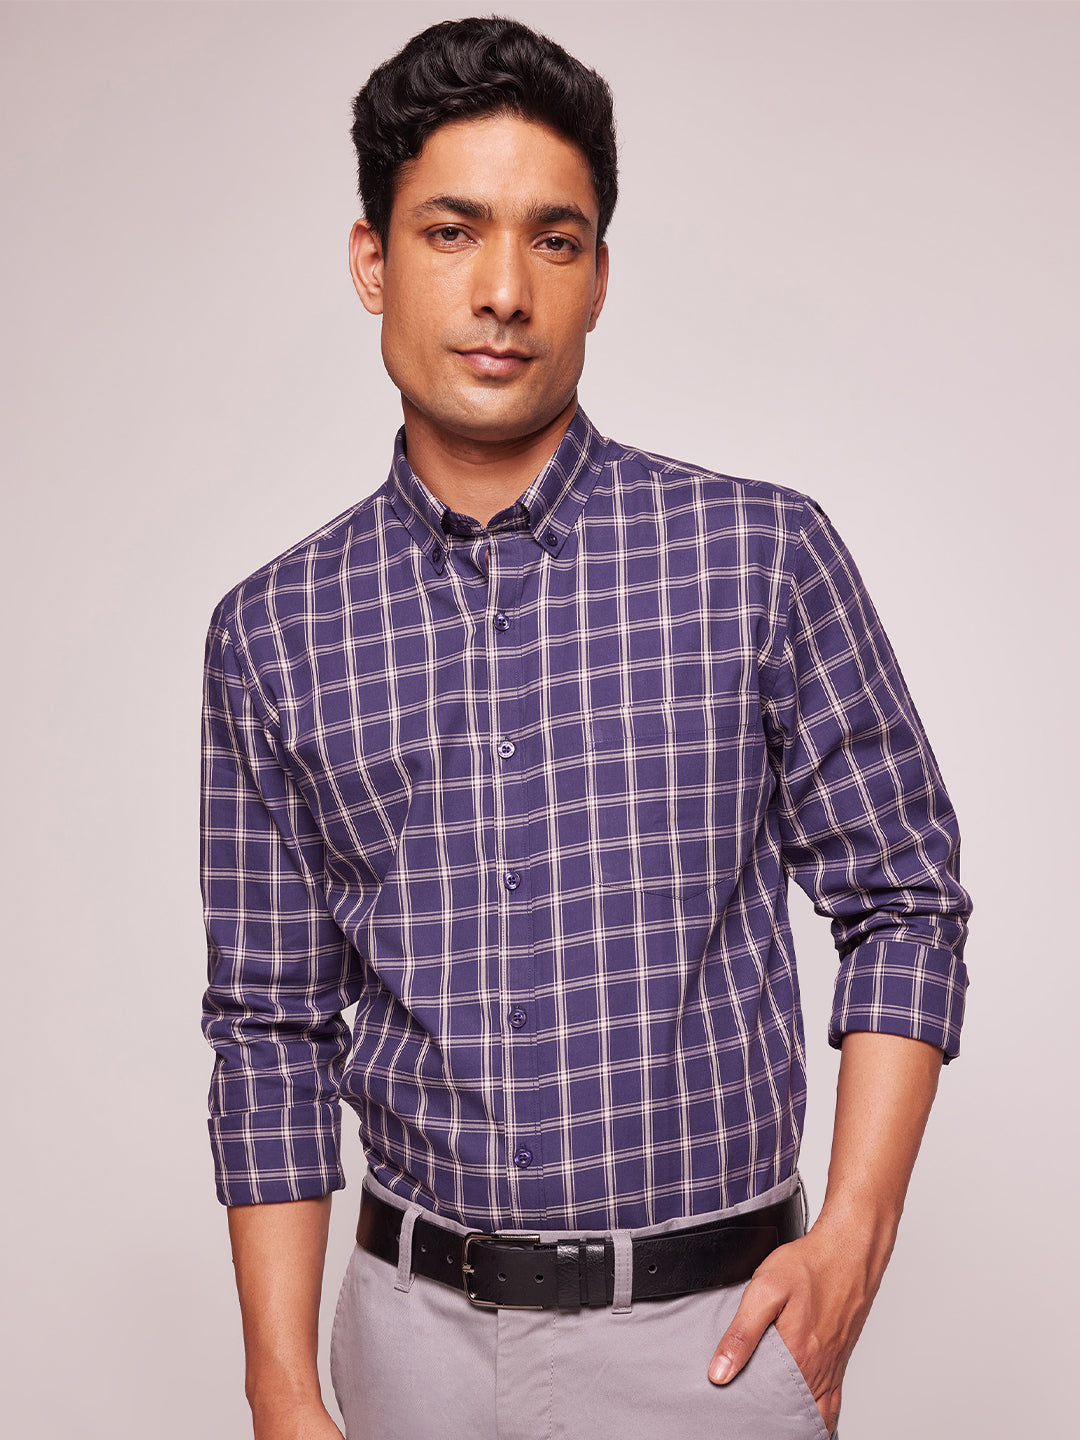 Bombay High Men's Premium Cotton Midnight Blue Checks Shirt